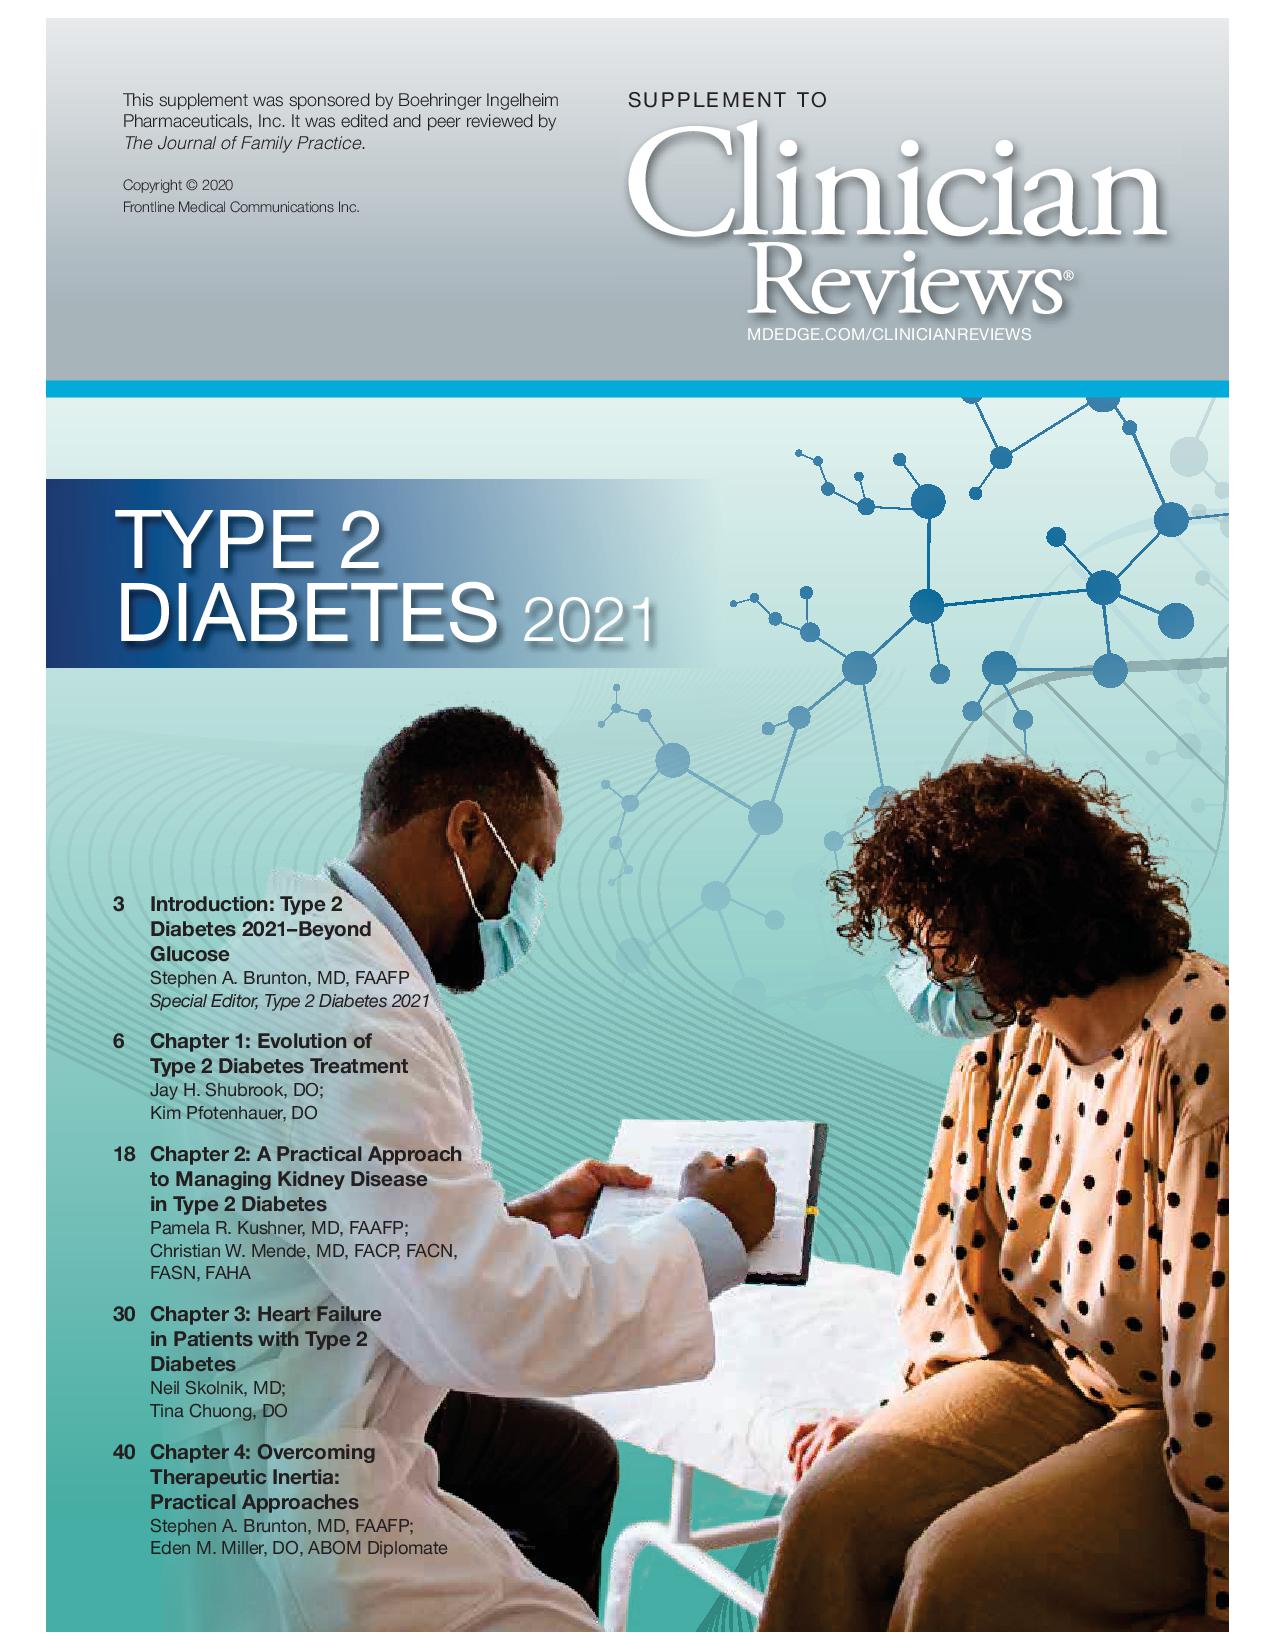 diabetes articles 2021)